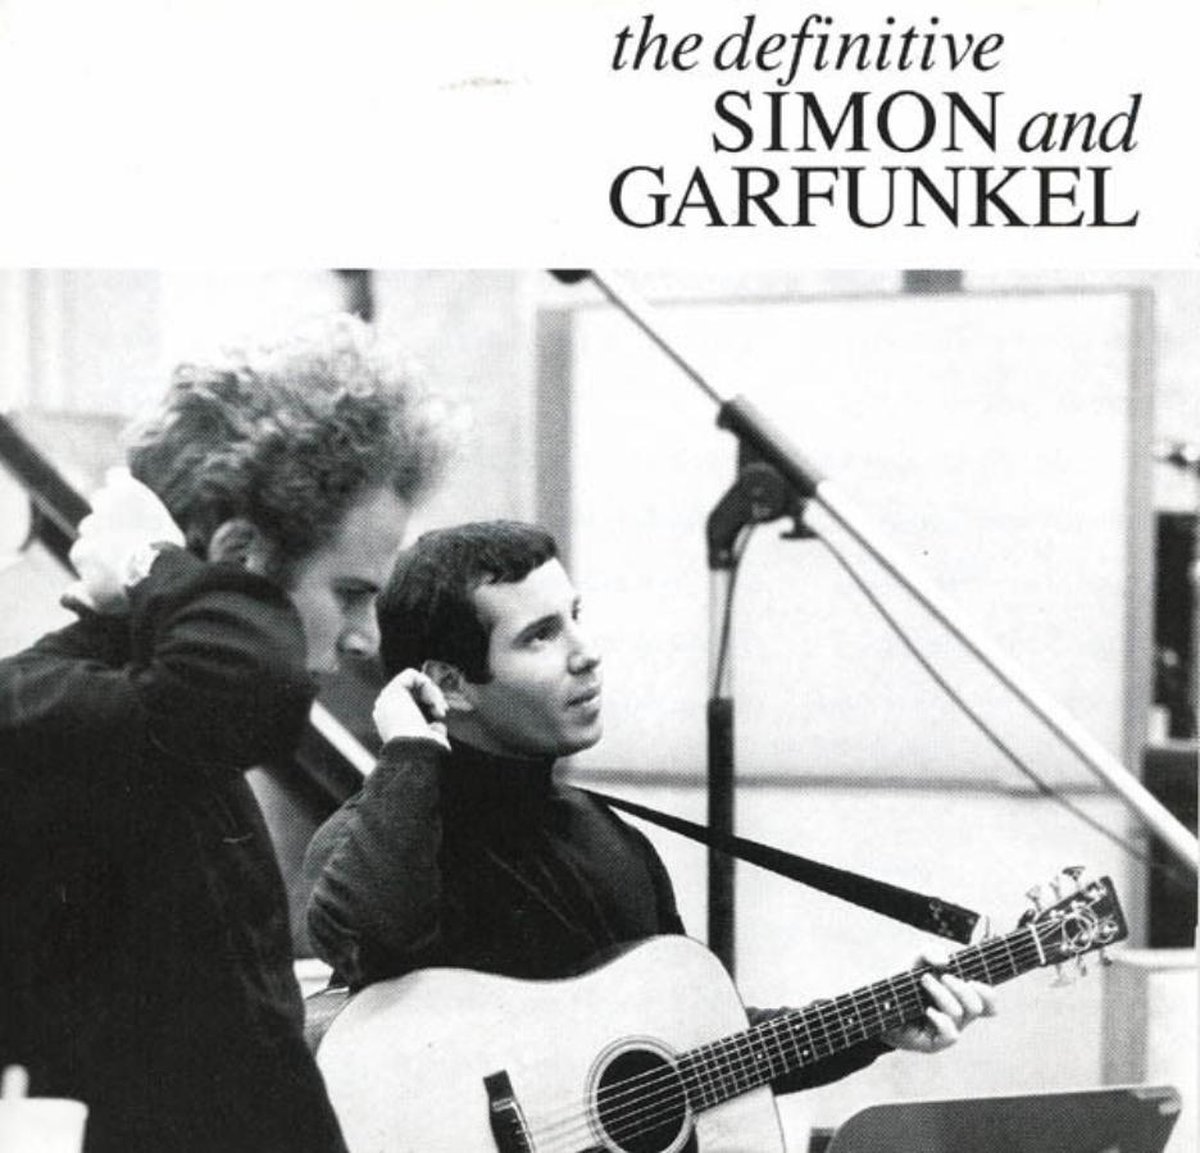 simon and garfunkel album covers